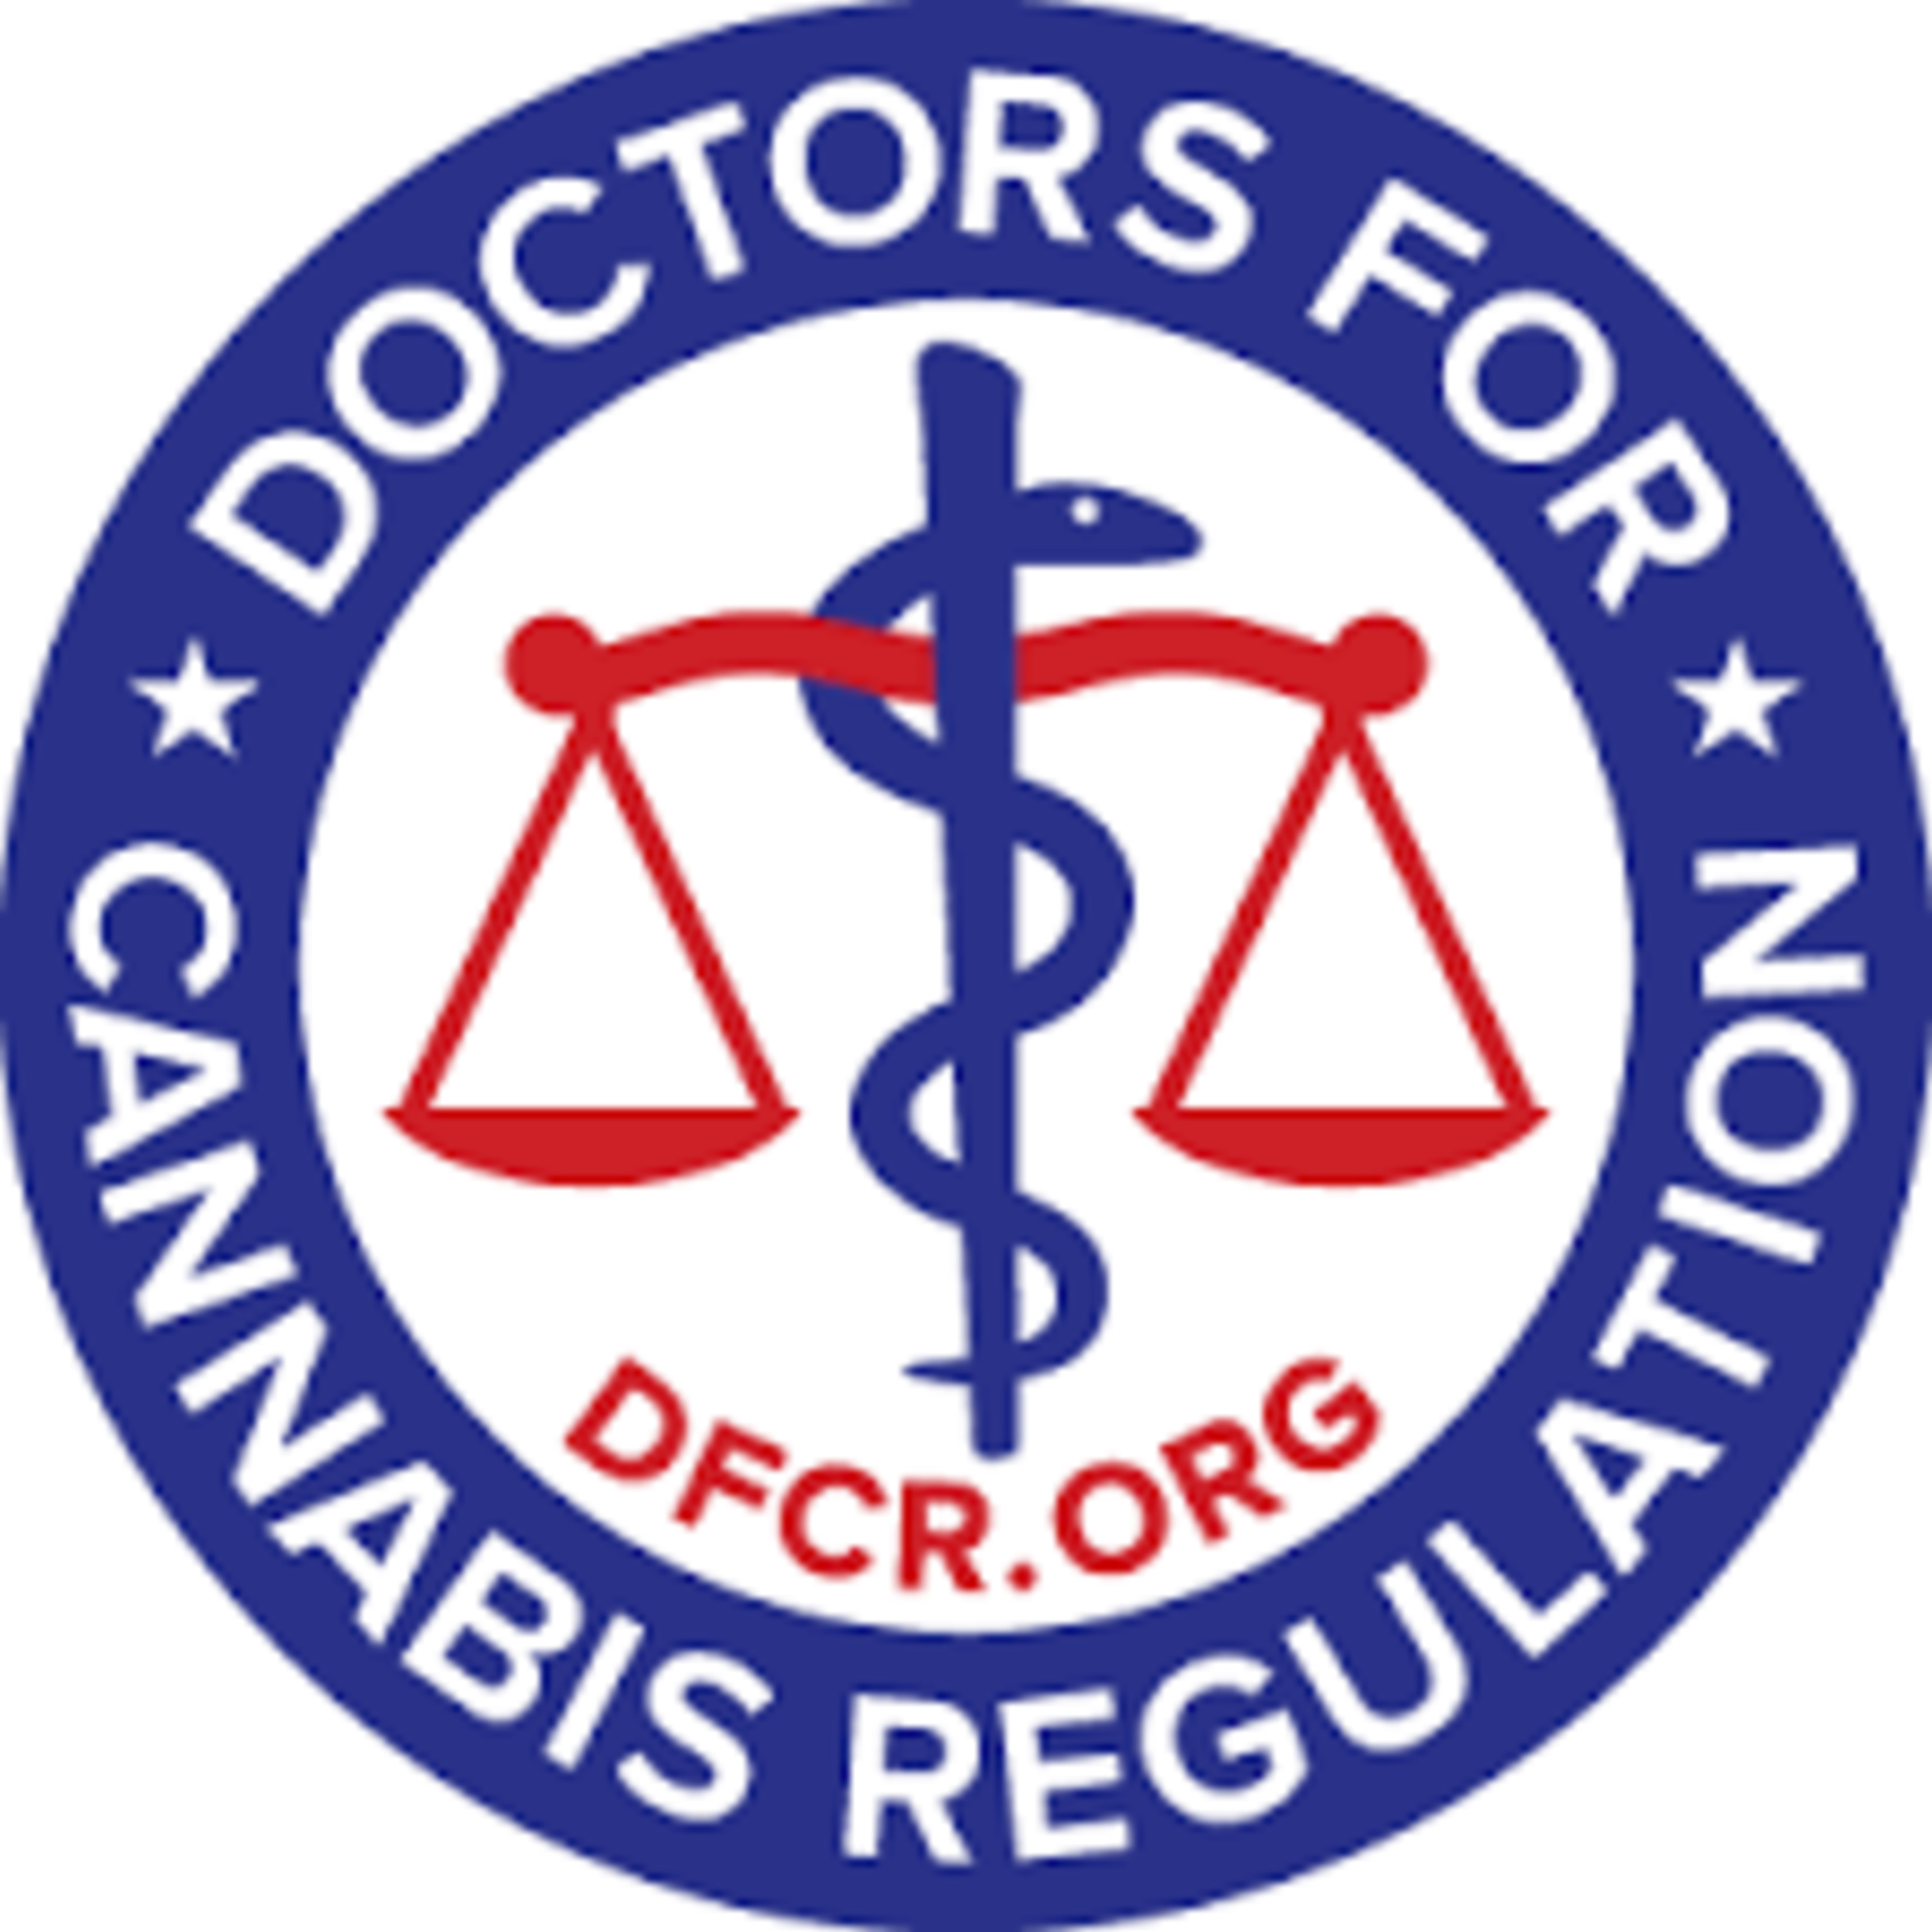 26 | David Nathan, M.D., Doctors for Cannabis Regulation